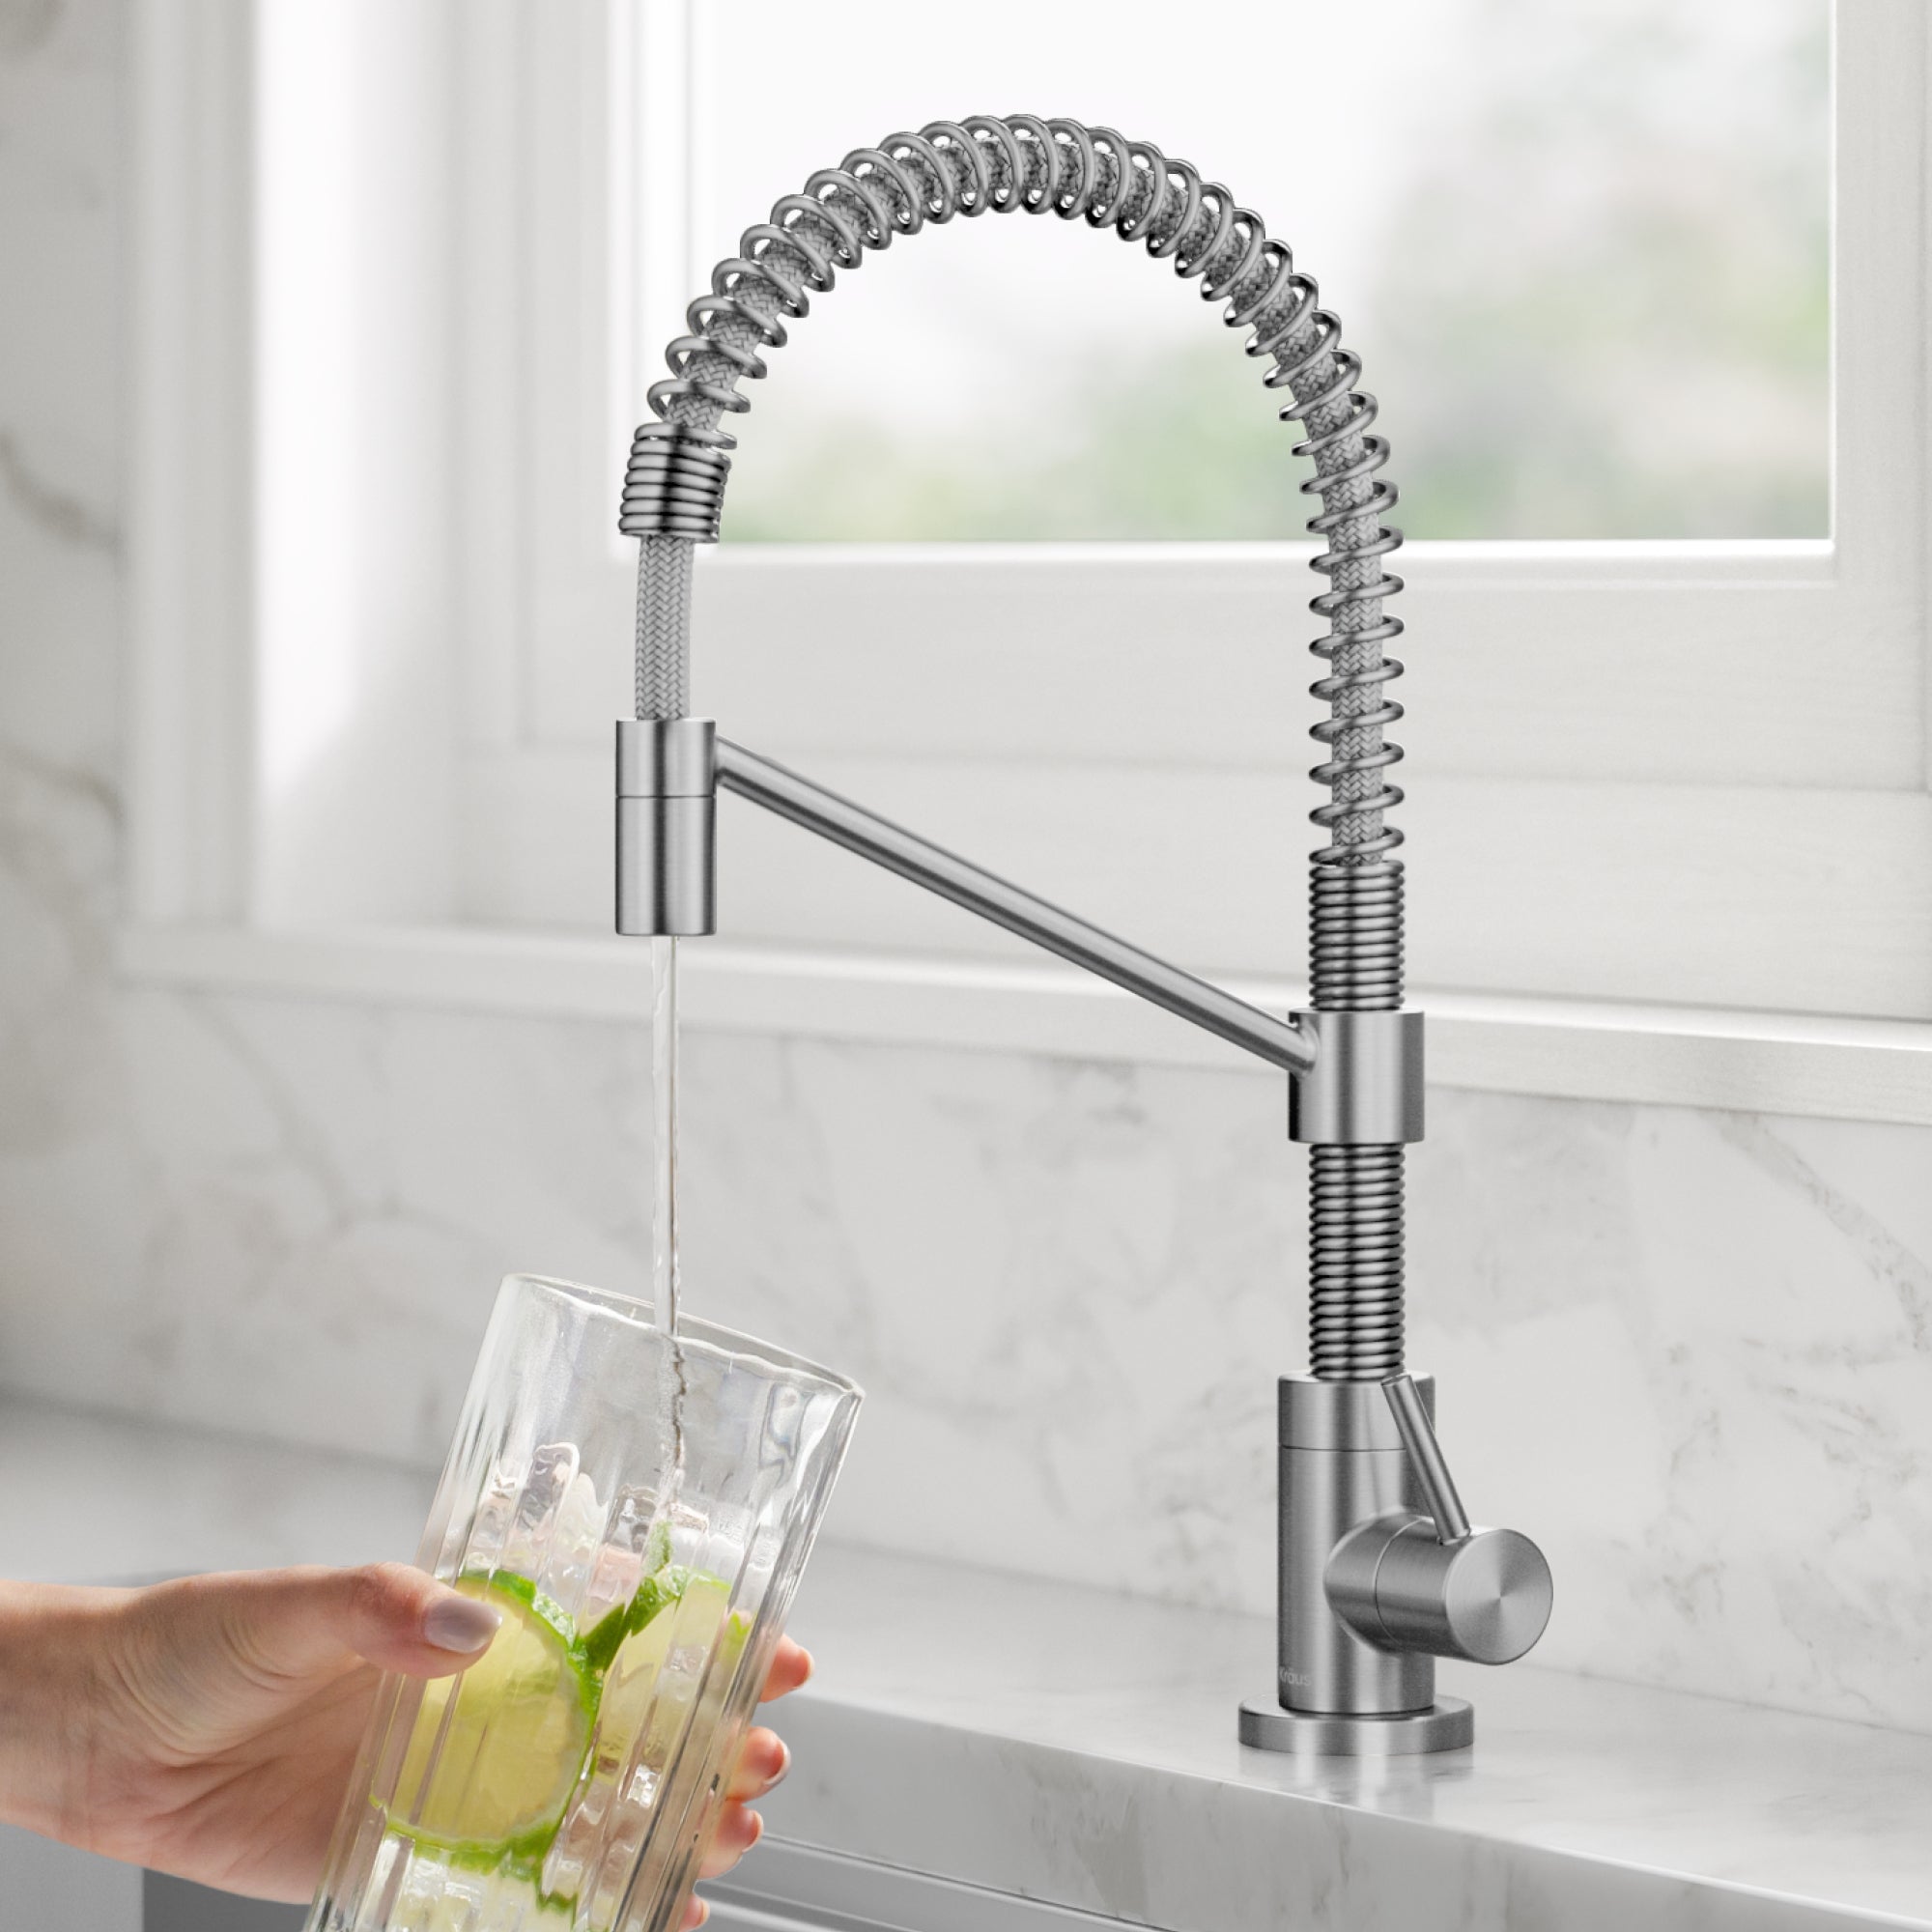 KRAUS Bolden Drinking Water Filter Faucet in Spot-Free Stainless